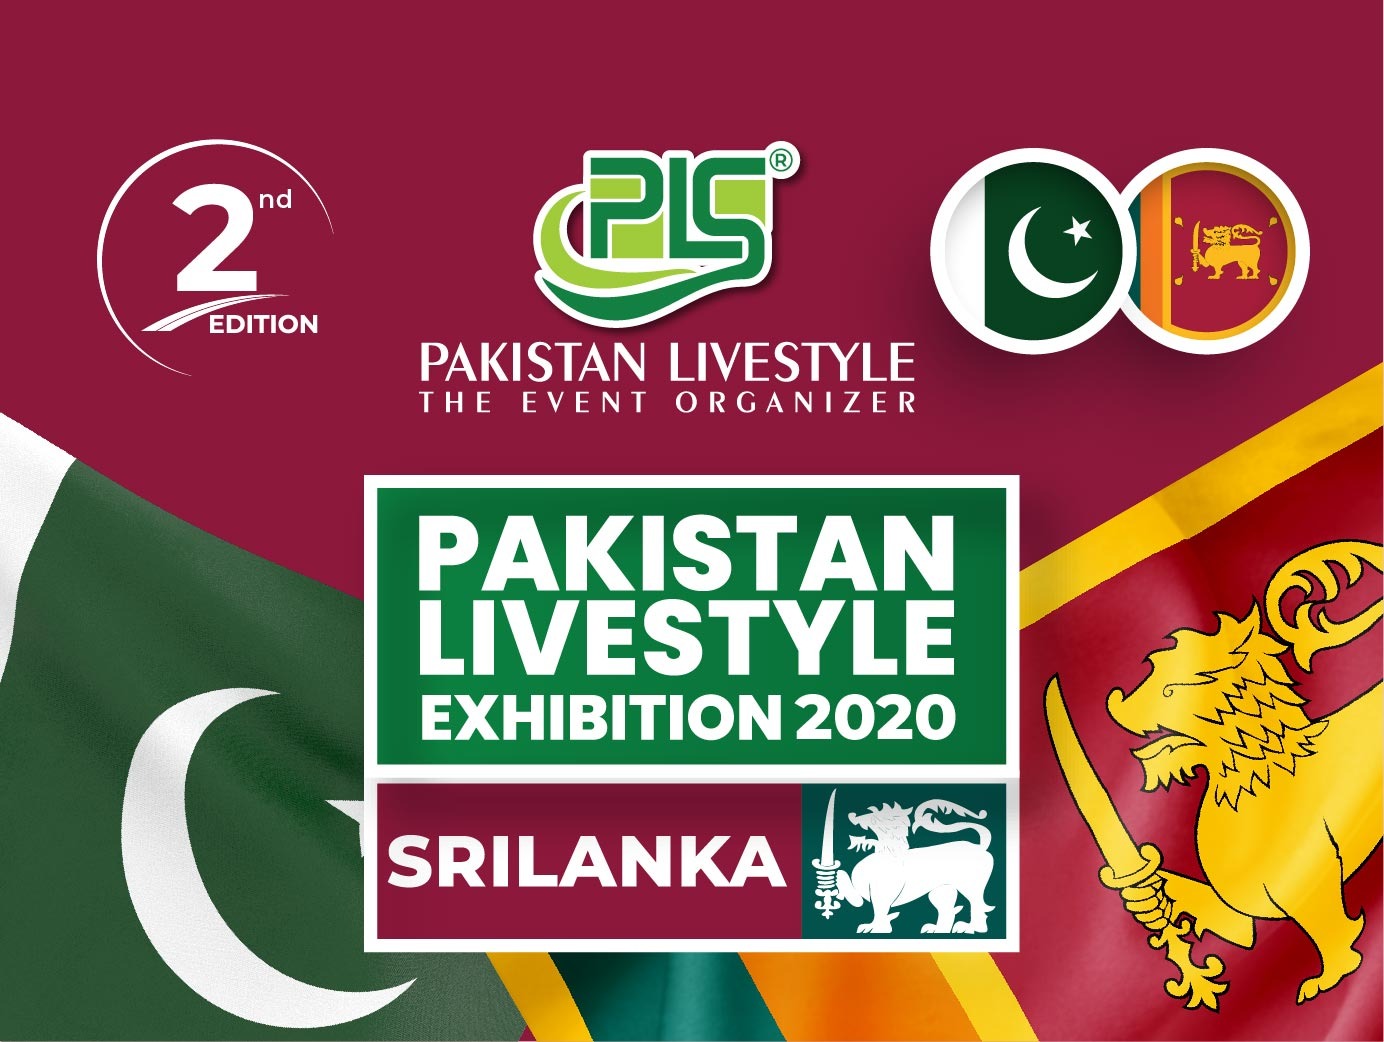 Colombo srilanka exhibition-2020 marketing flag